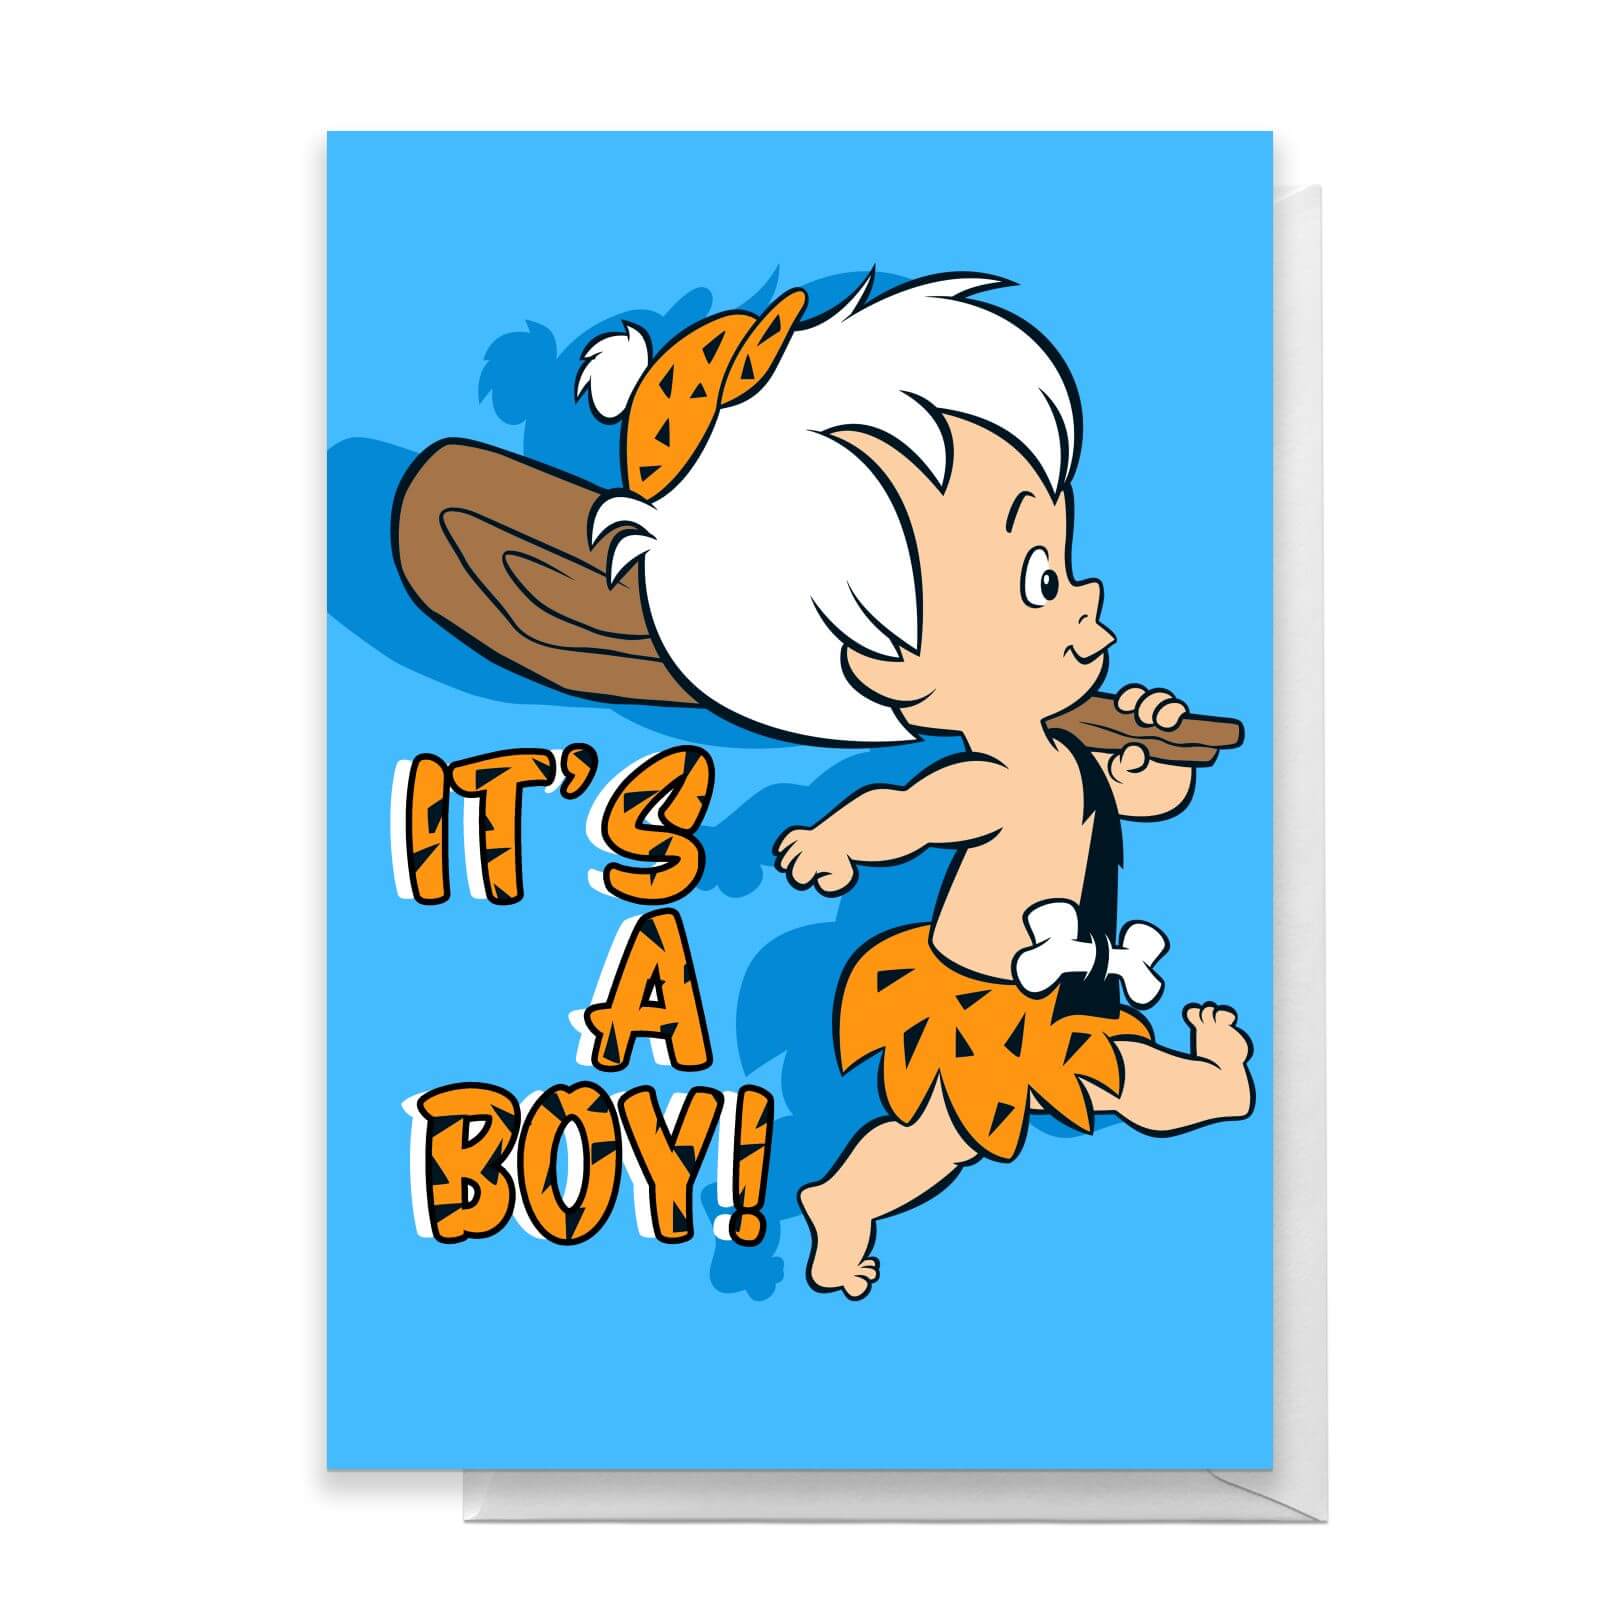 Flintstones New Baby Boy Greetings Card - Standard Card